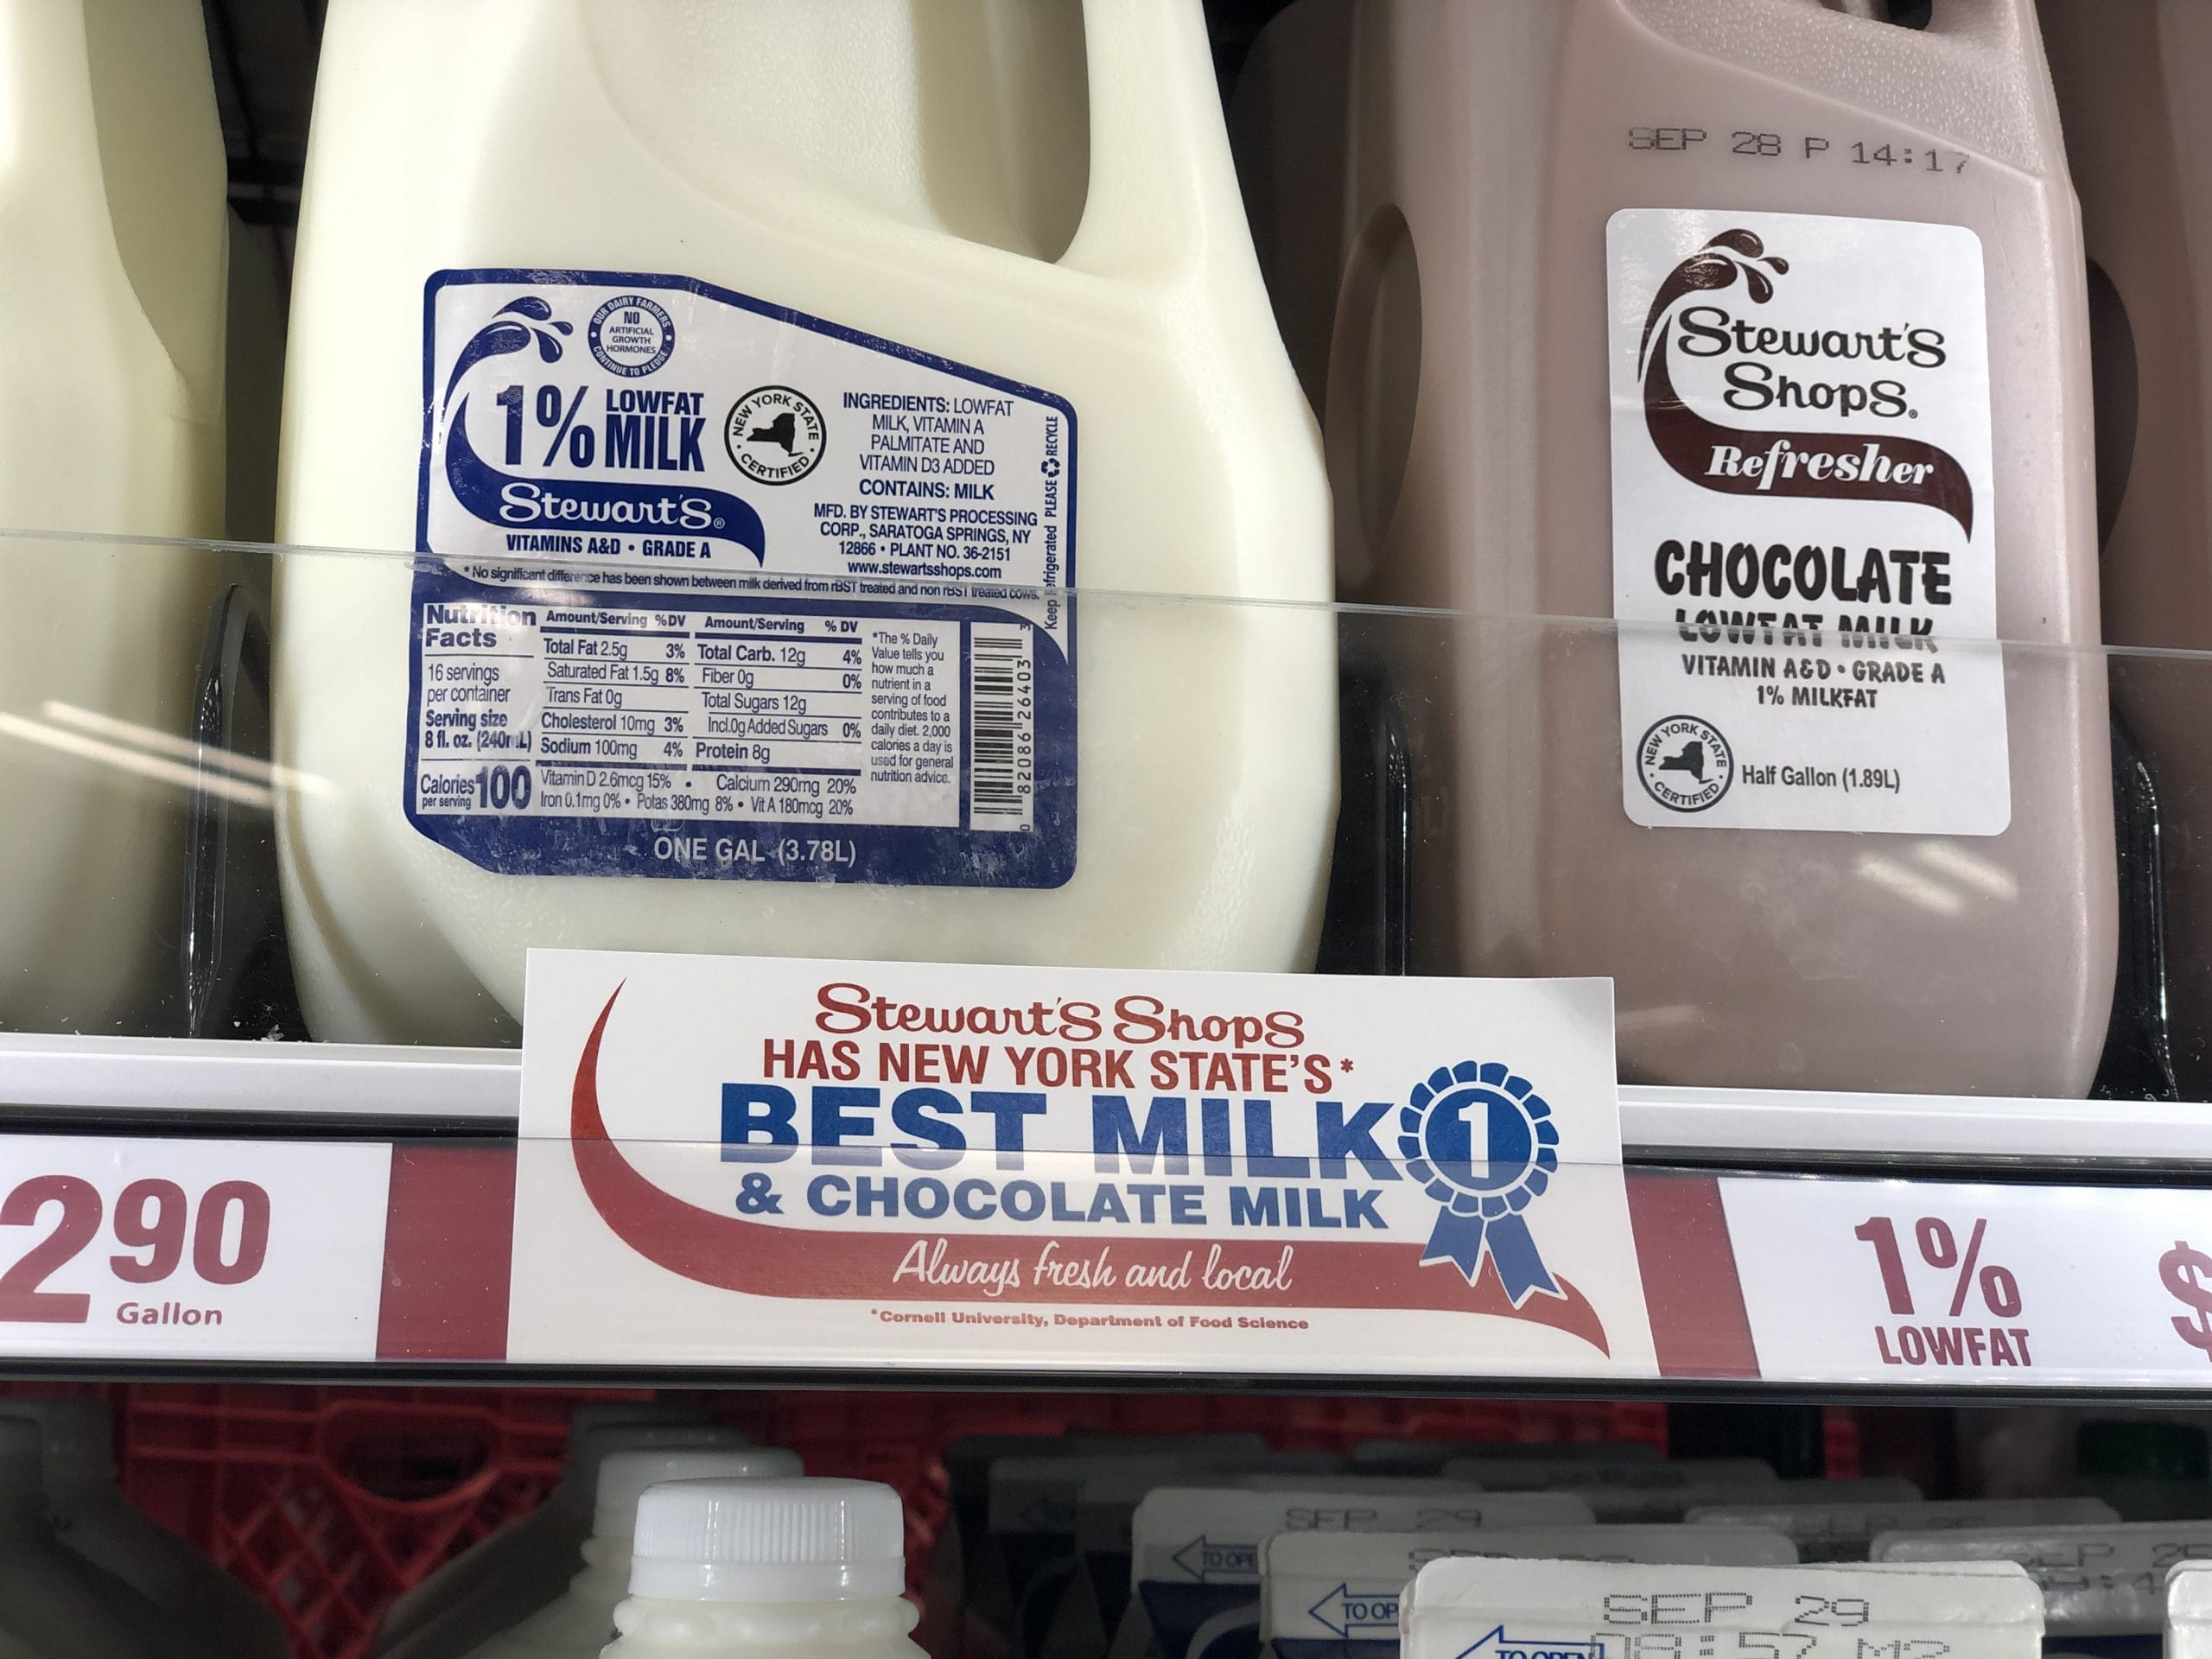 Milk gallon and chocolate milk half gallon